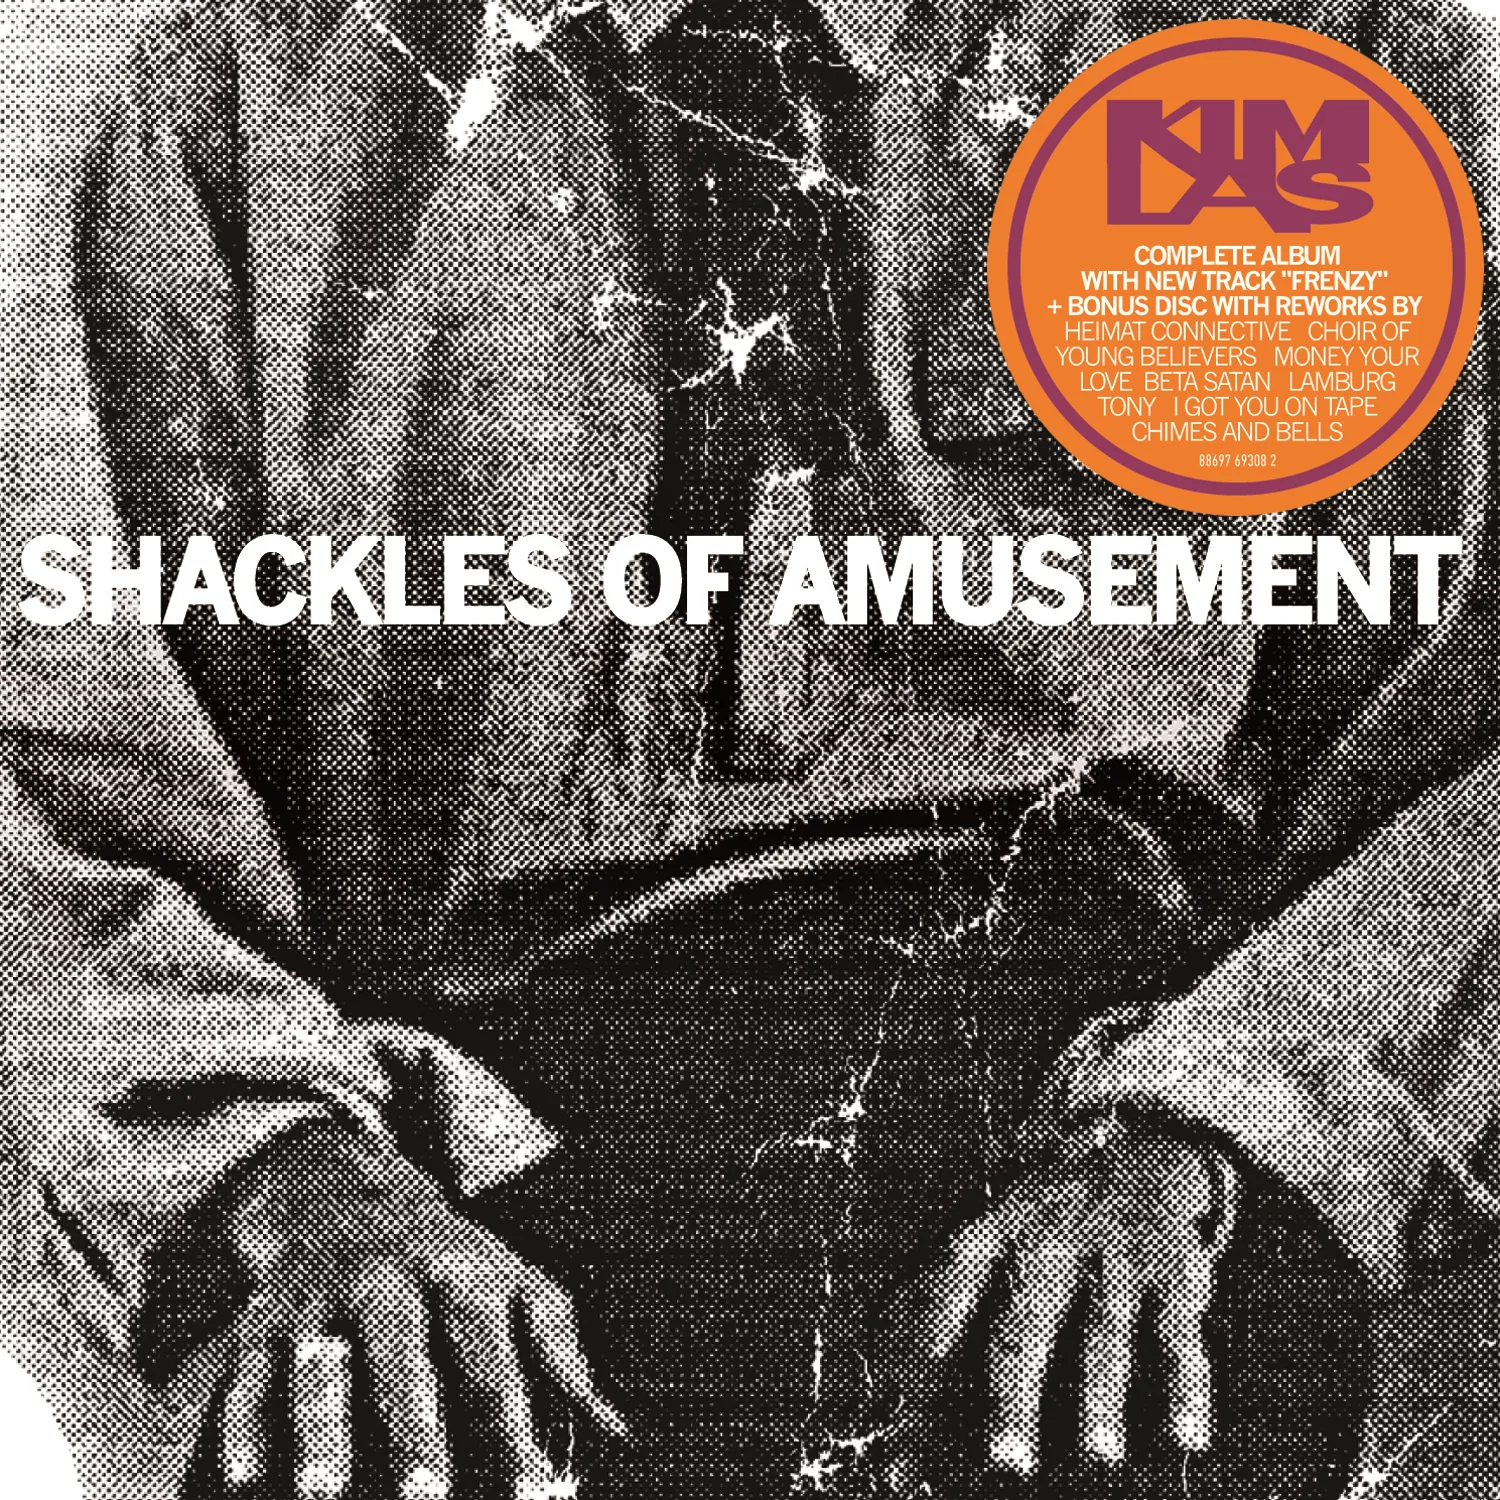 Kim Las' Shackles Of Amusement genudgives på cd 